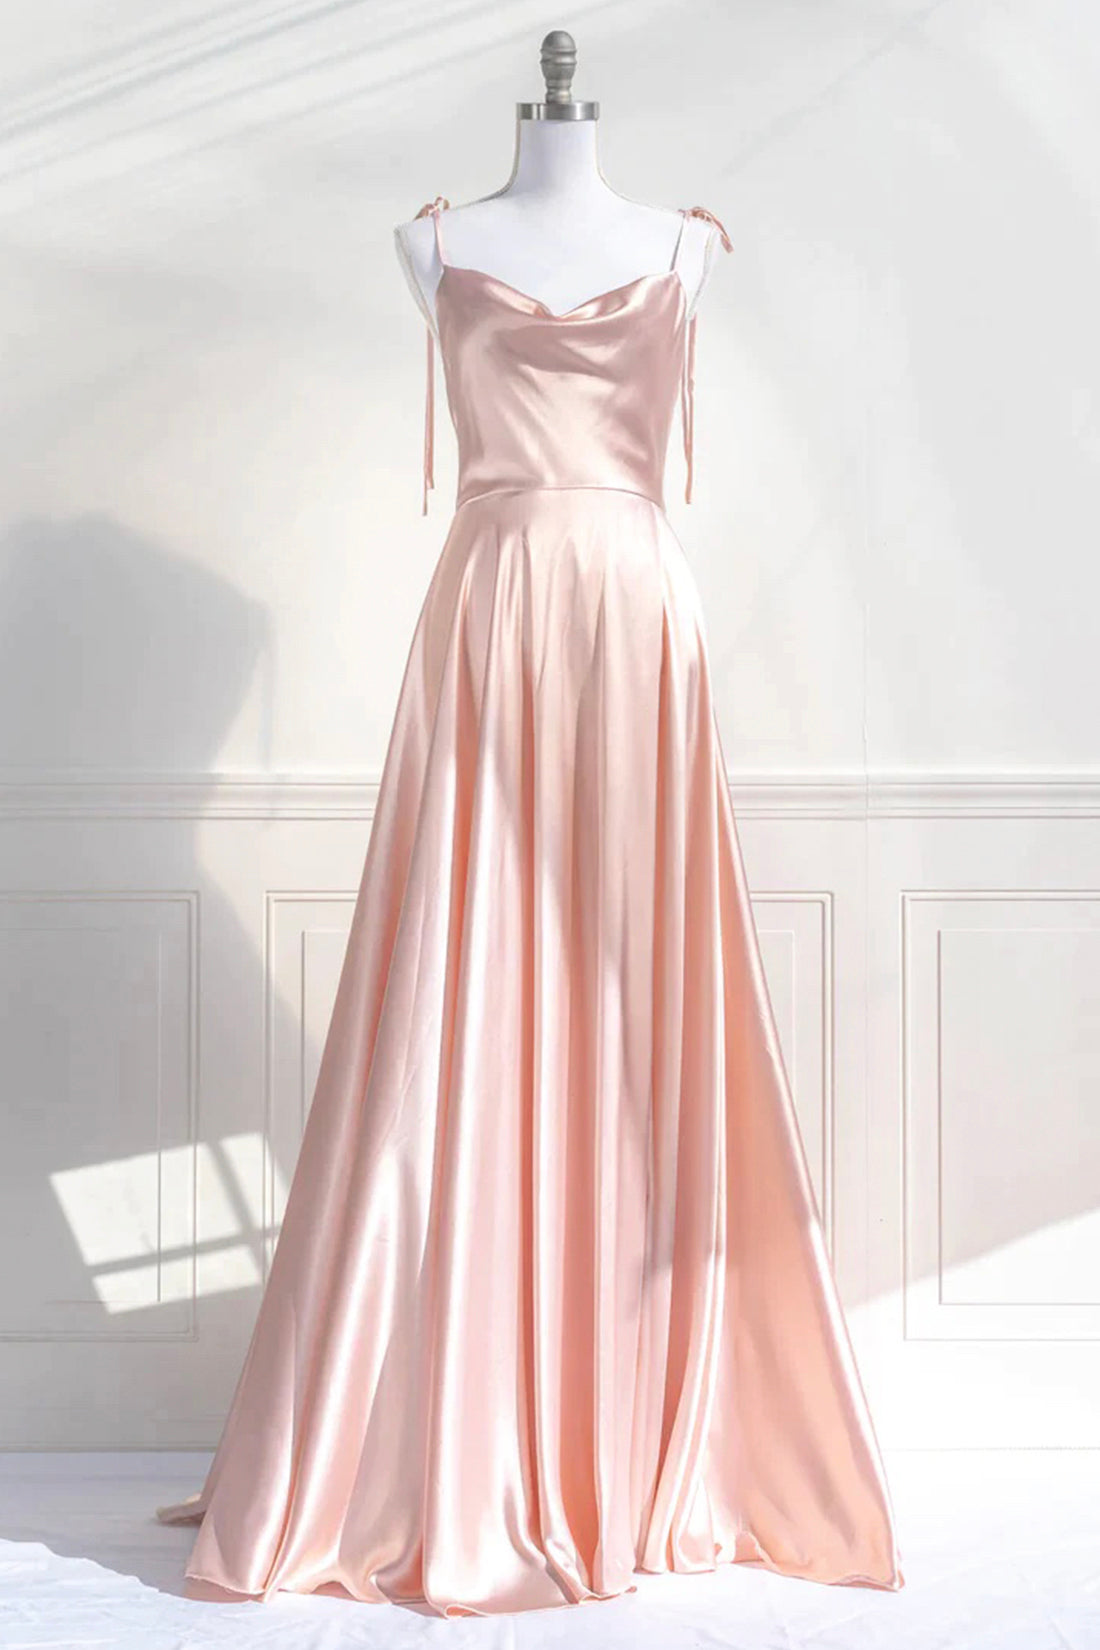 Simple A line pink satin long prom dress, pink evening dress